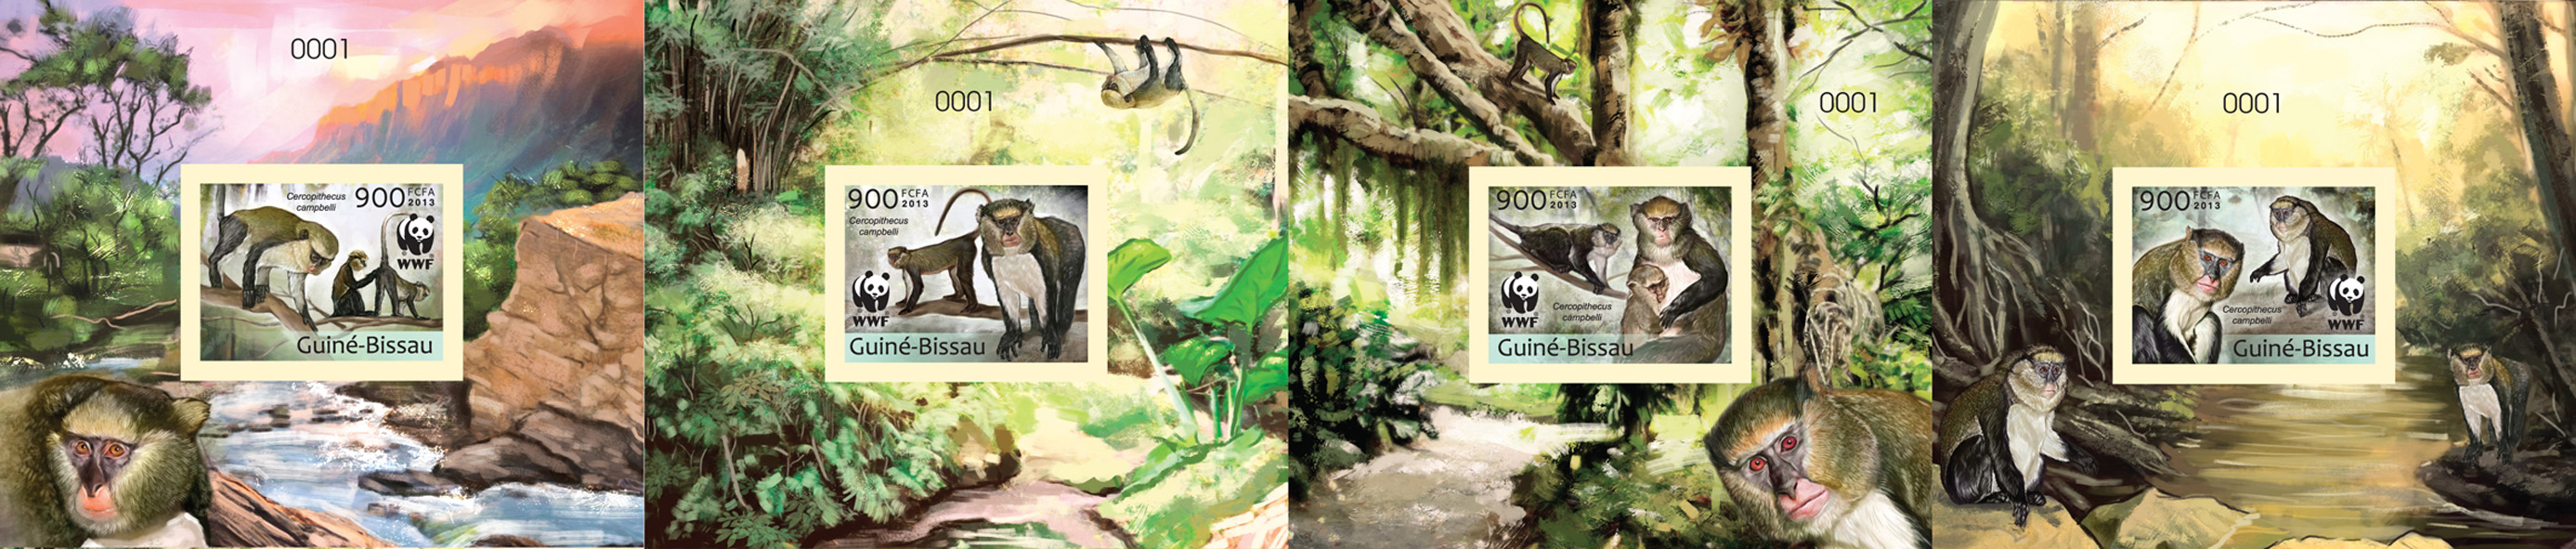 WWF - Monkeys - Issue of Guinée-Bissau postage stamps